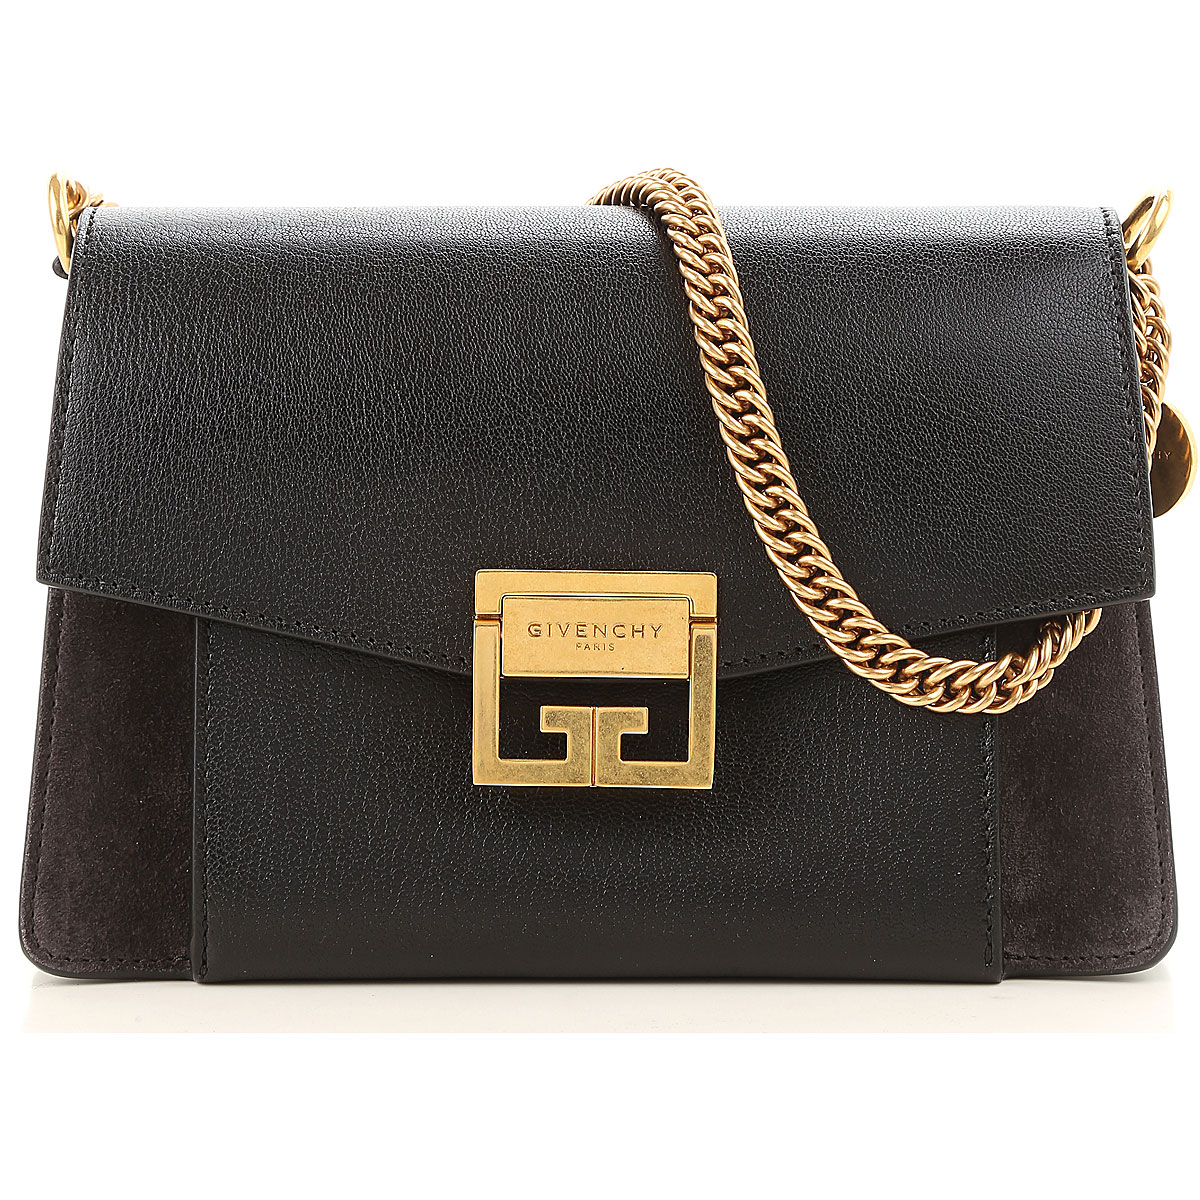 Handbags Givenchy, Style code: bb501cb033-002-